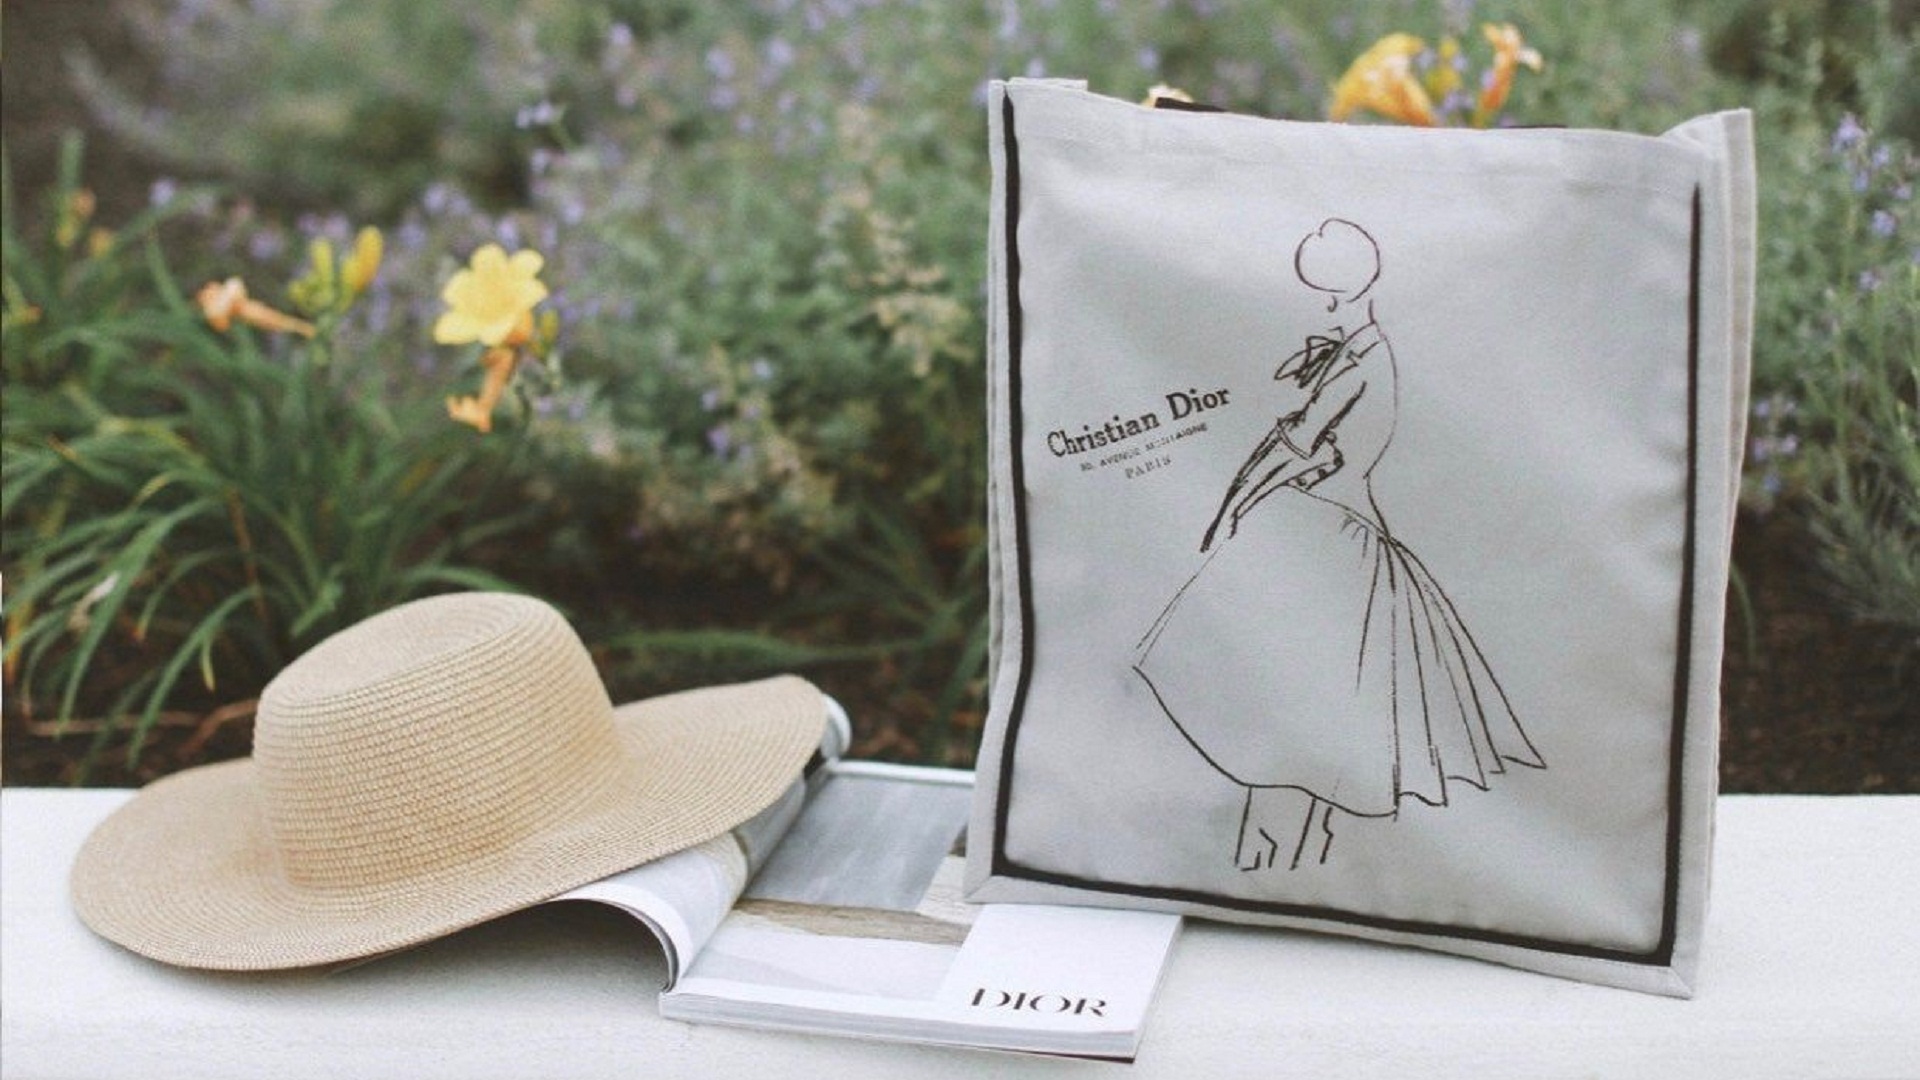 Victoria Albert Museum UK Exclusive Dior Exhibition Souvenir Tote Bag